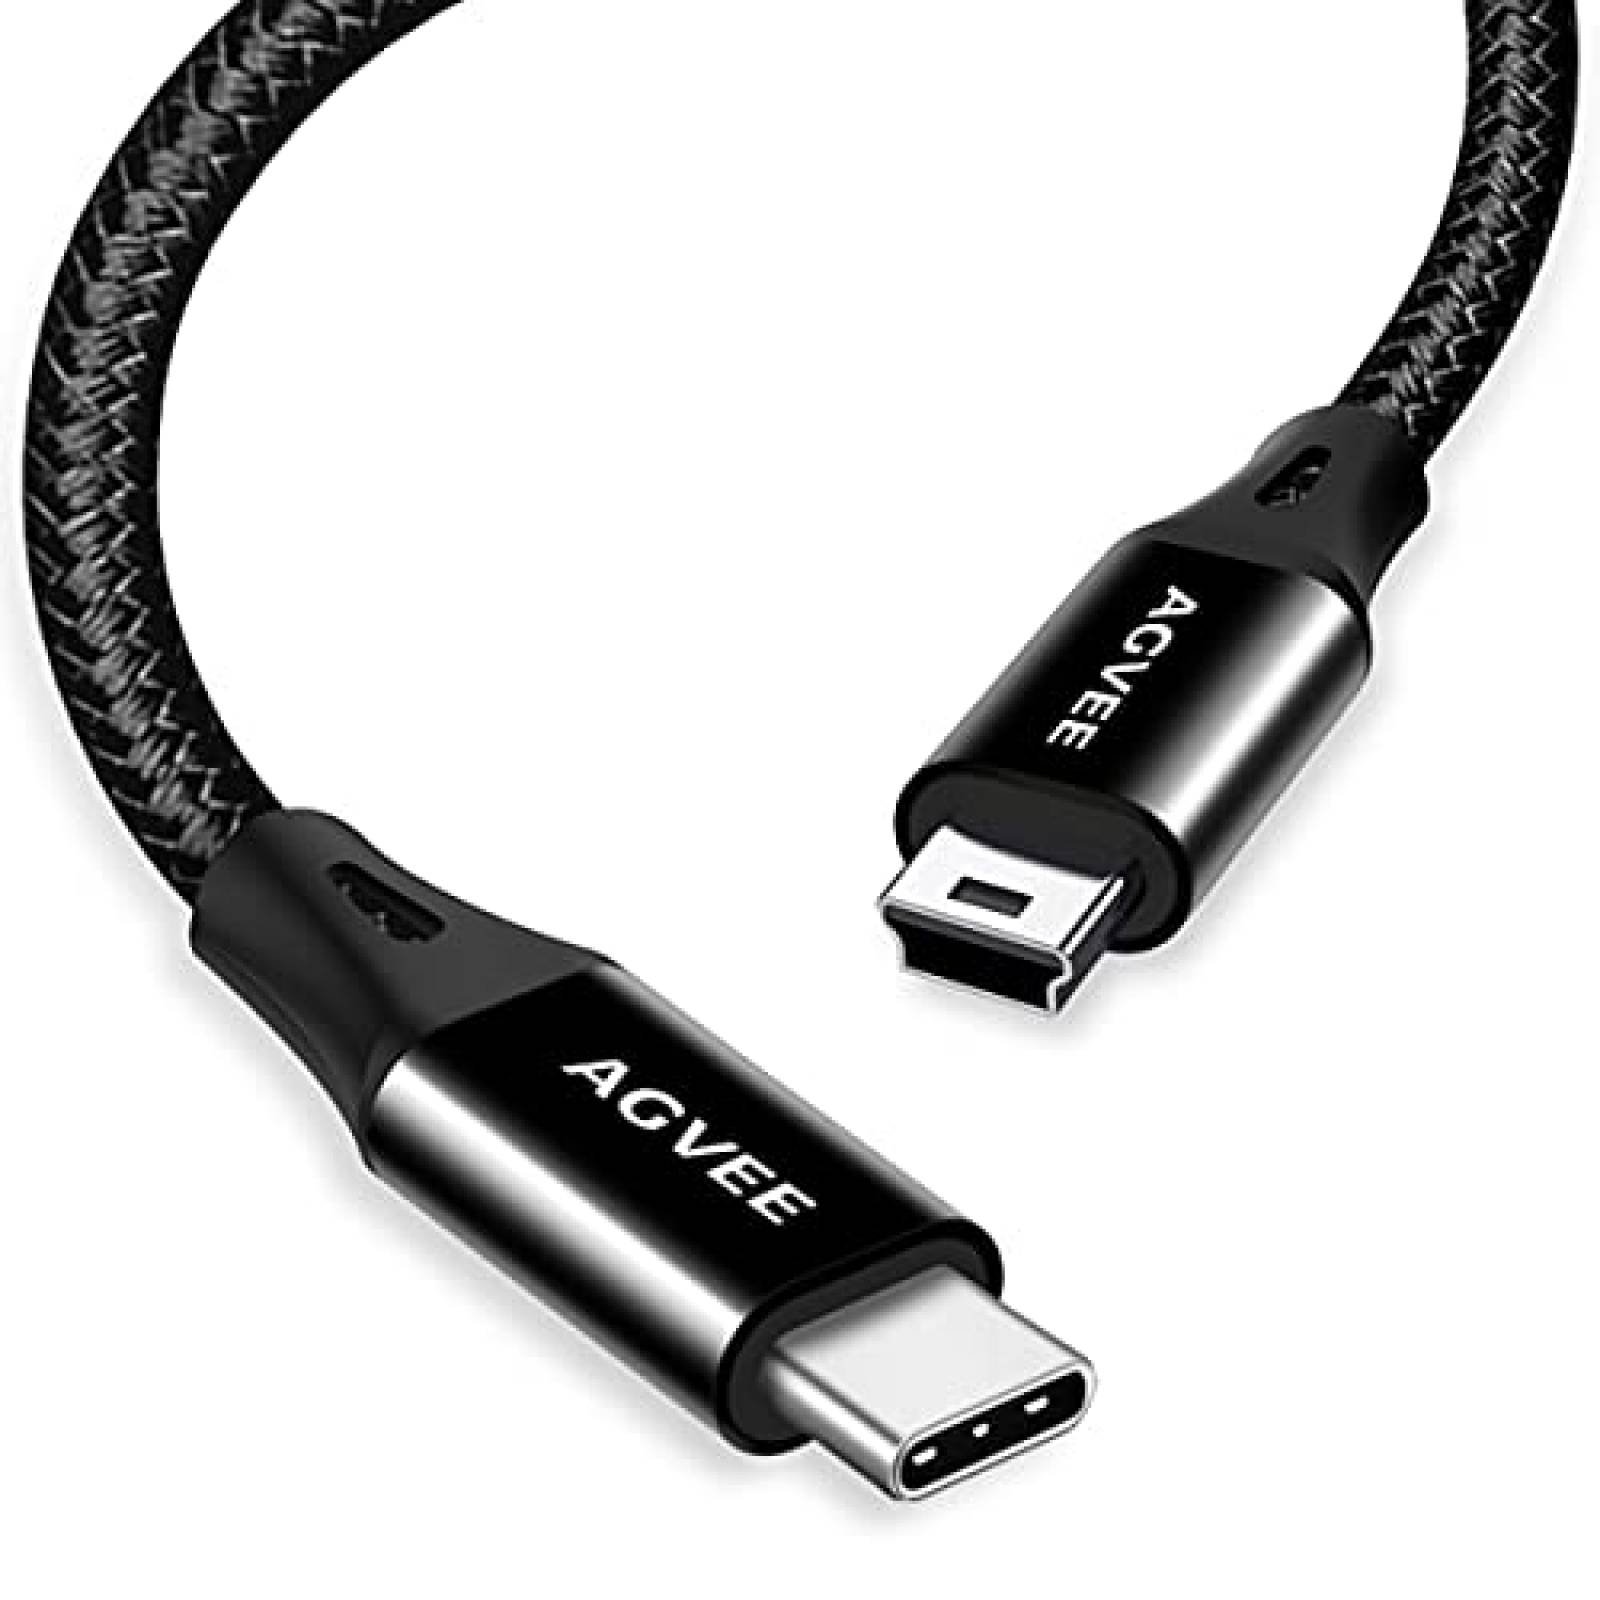 Cable USB-C a Mini USB AGVEE corto cargador de datos -Negro